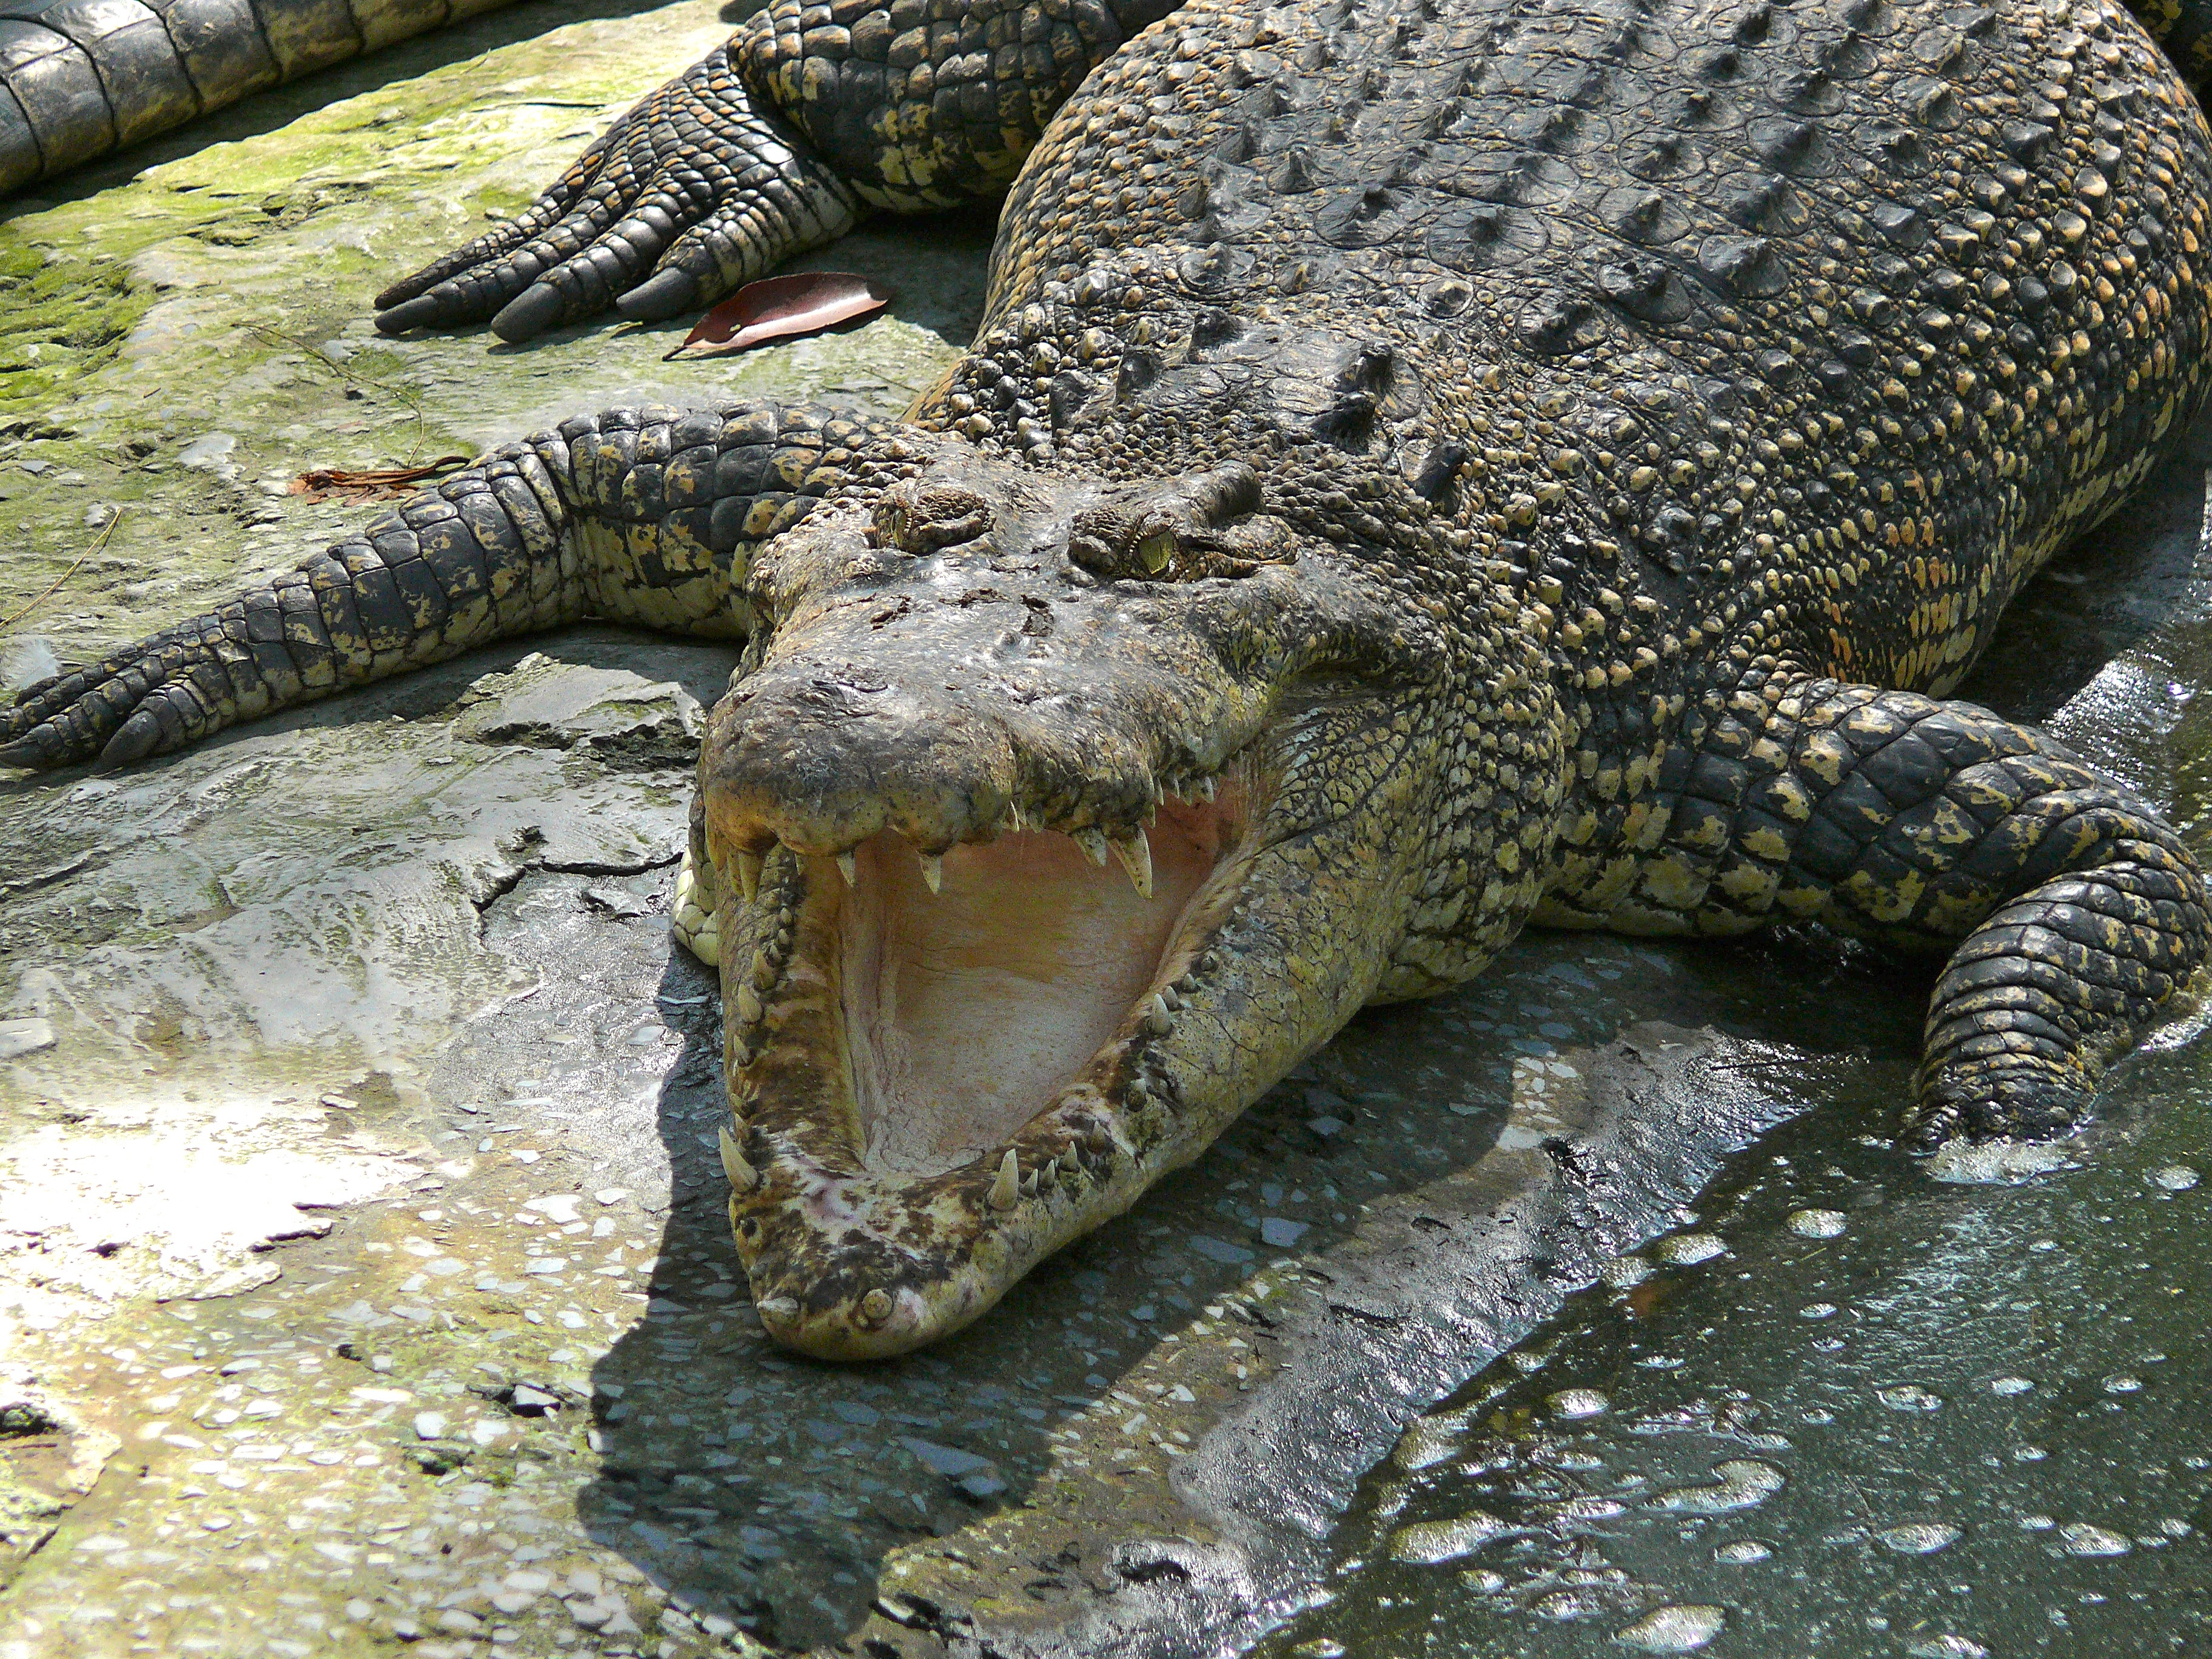 Crocodile farm - Wikipedia